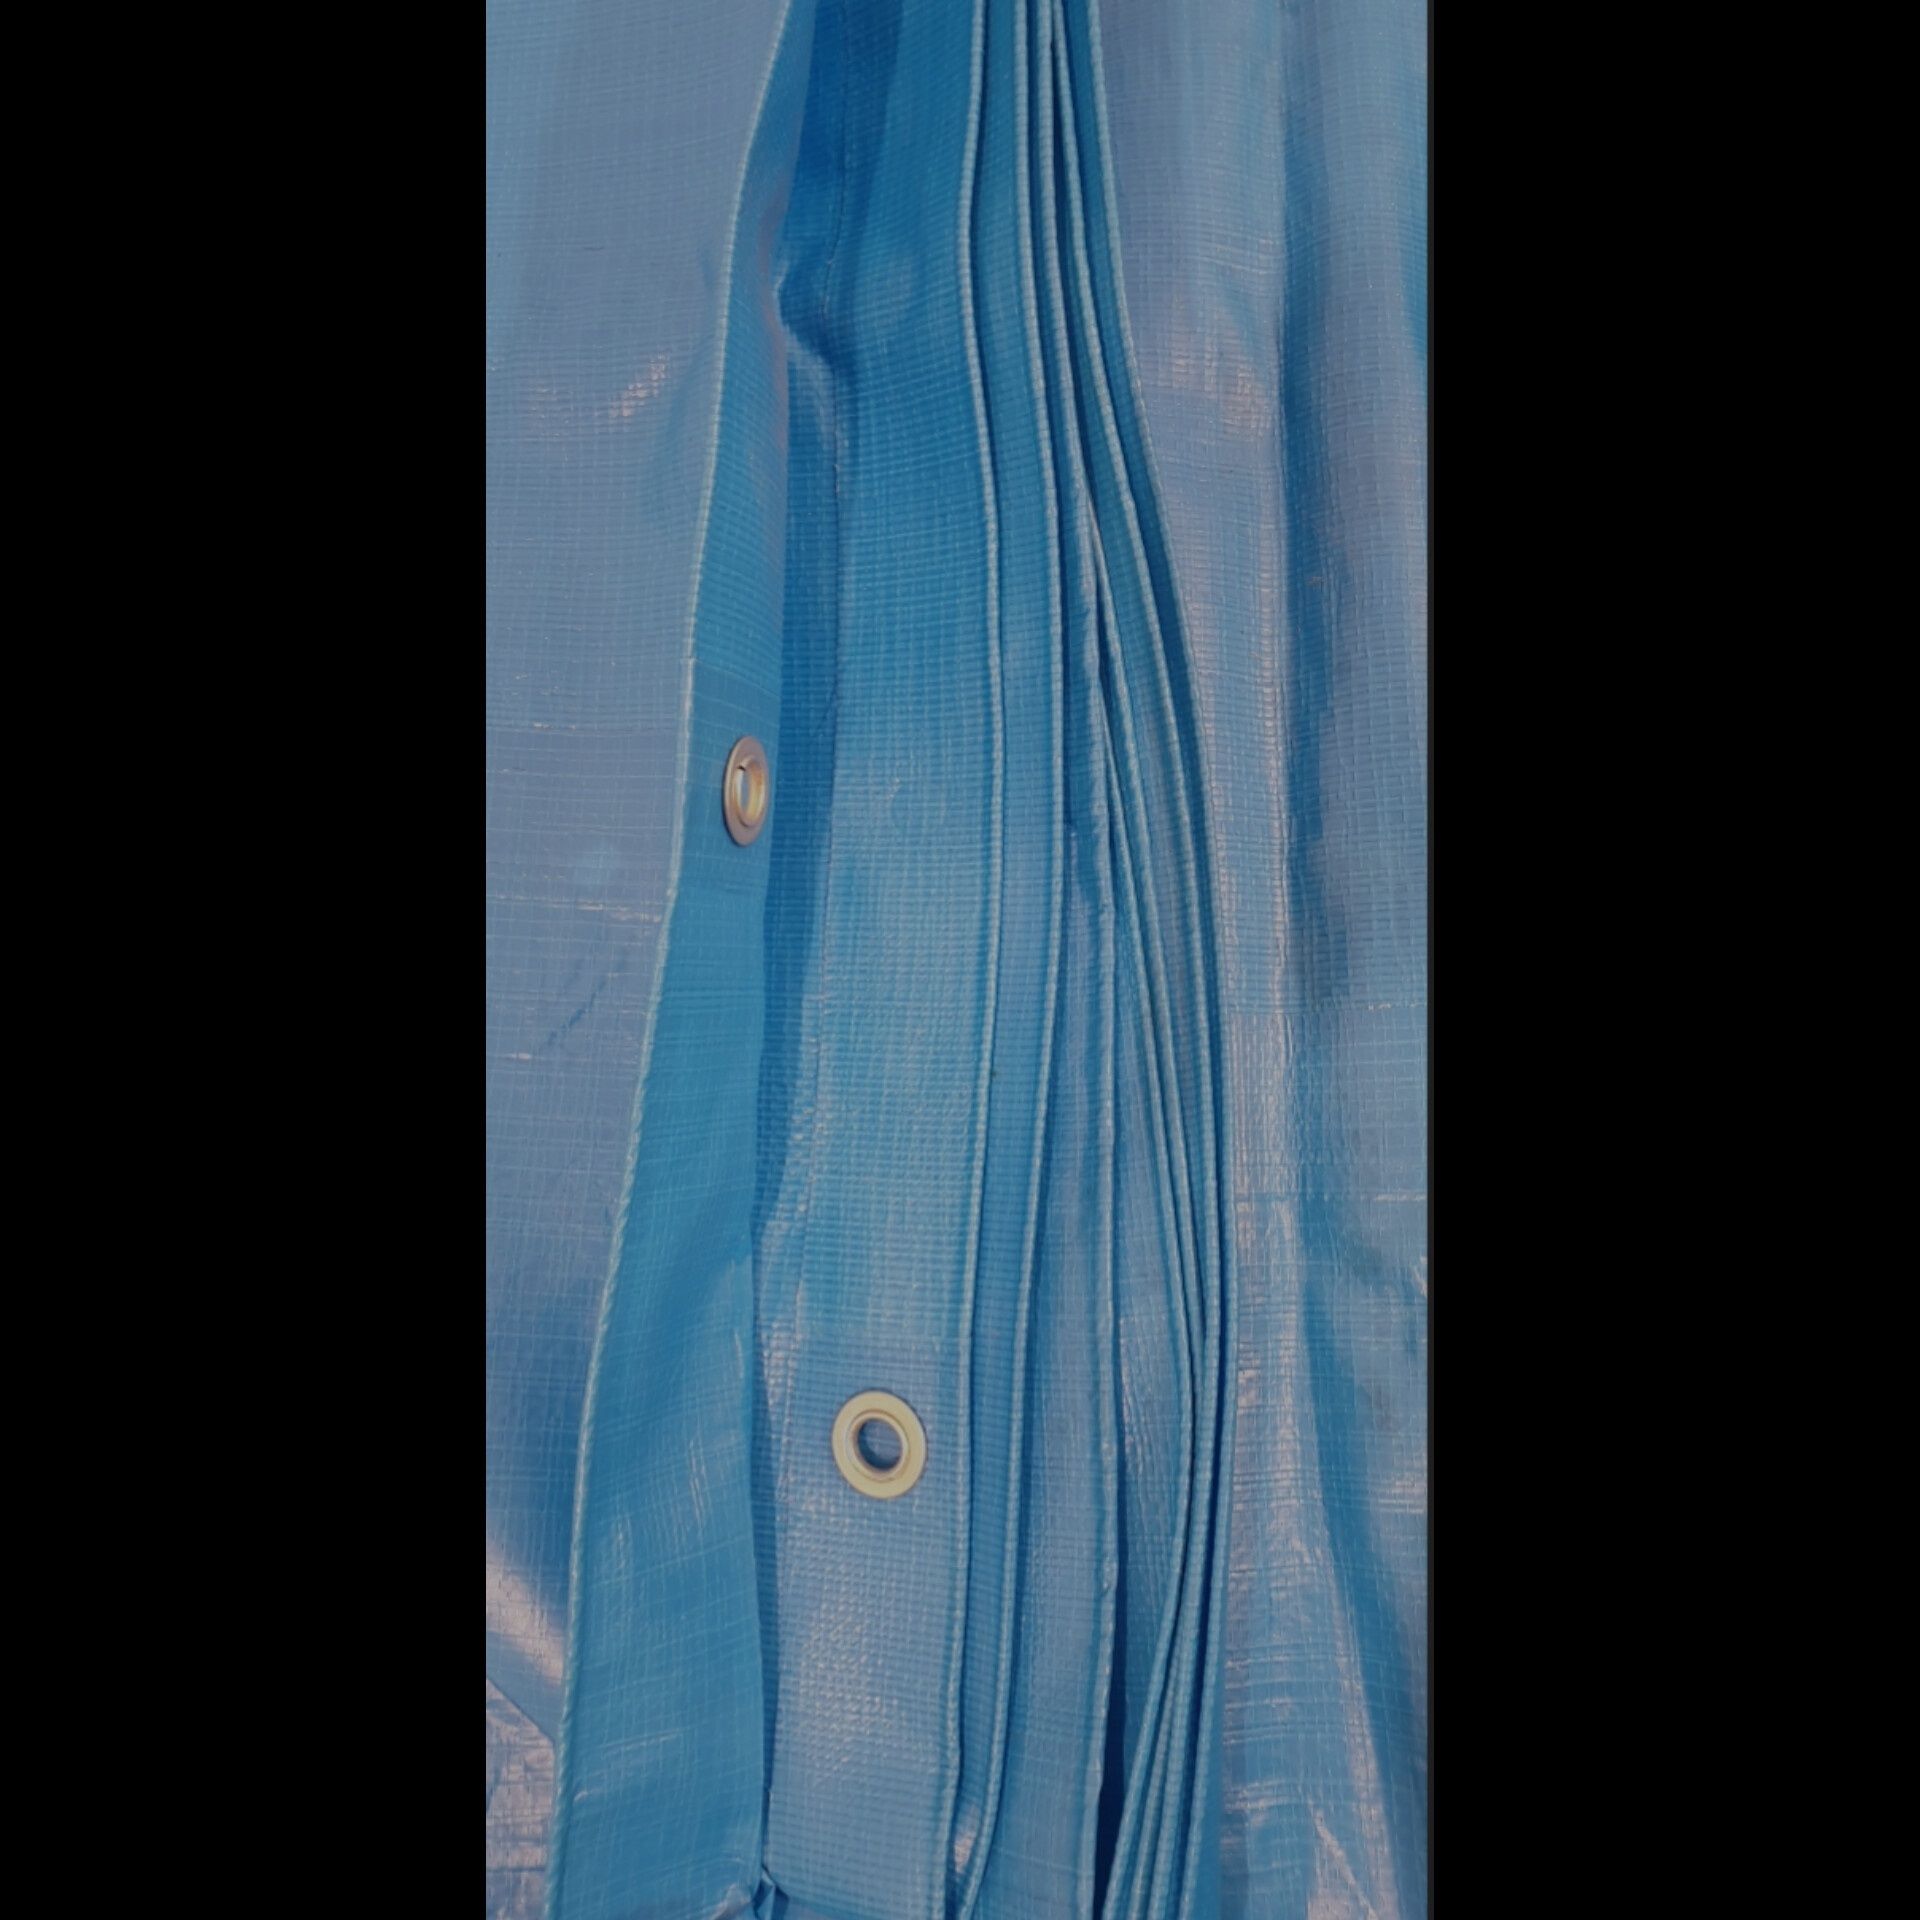 Plandeka w kolorze niebieskim, Super Mocna  41,6m2

Gramatur